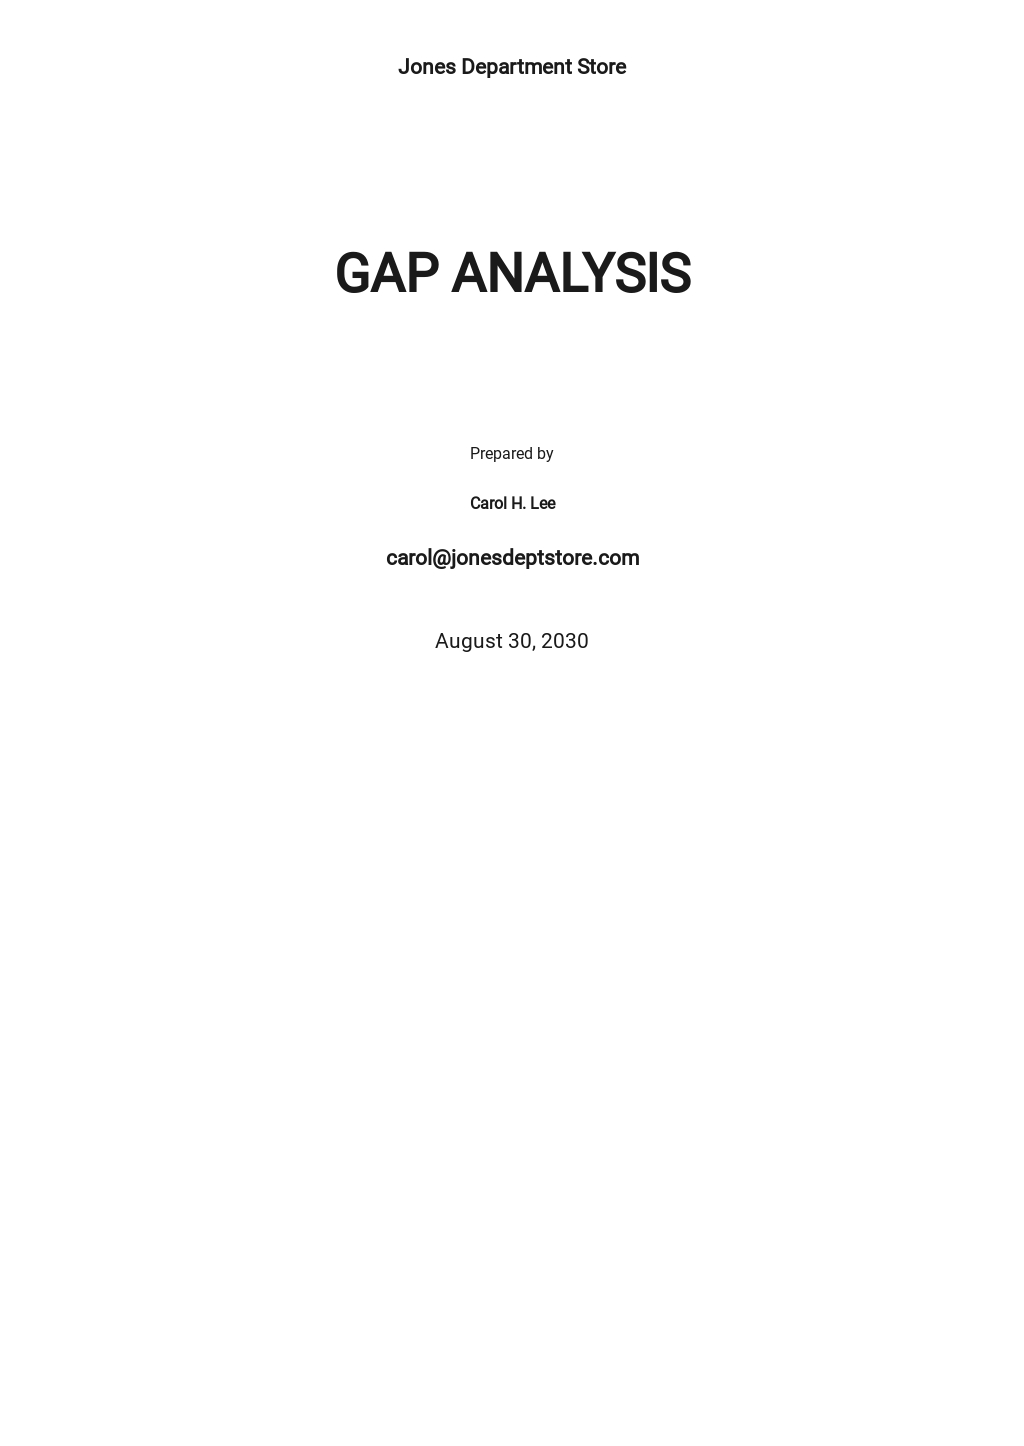 Training Gap Analysis Template.jpe